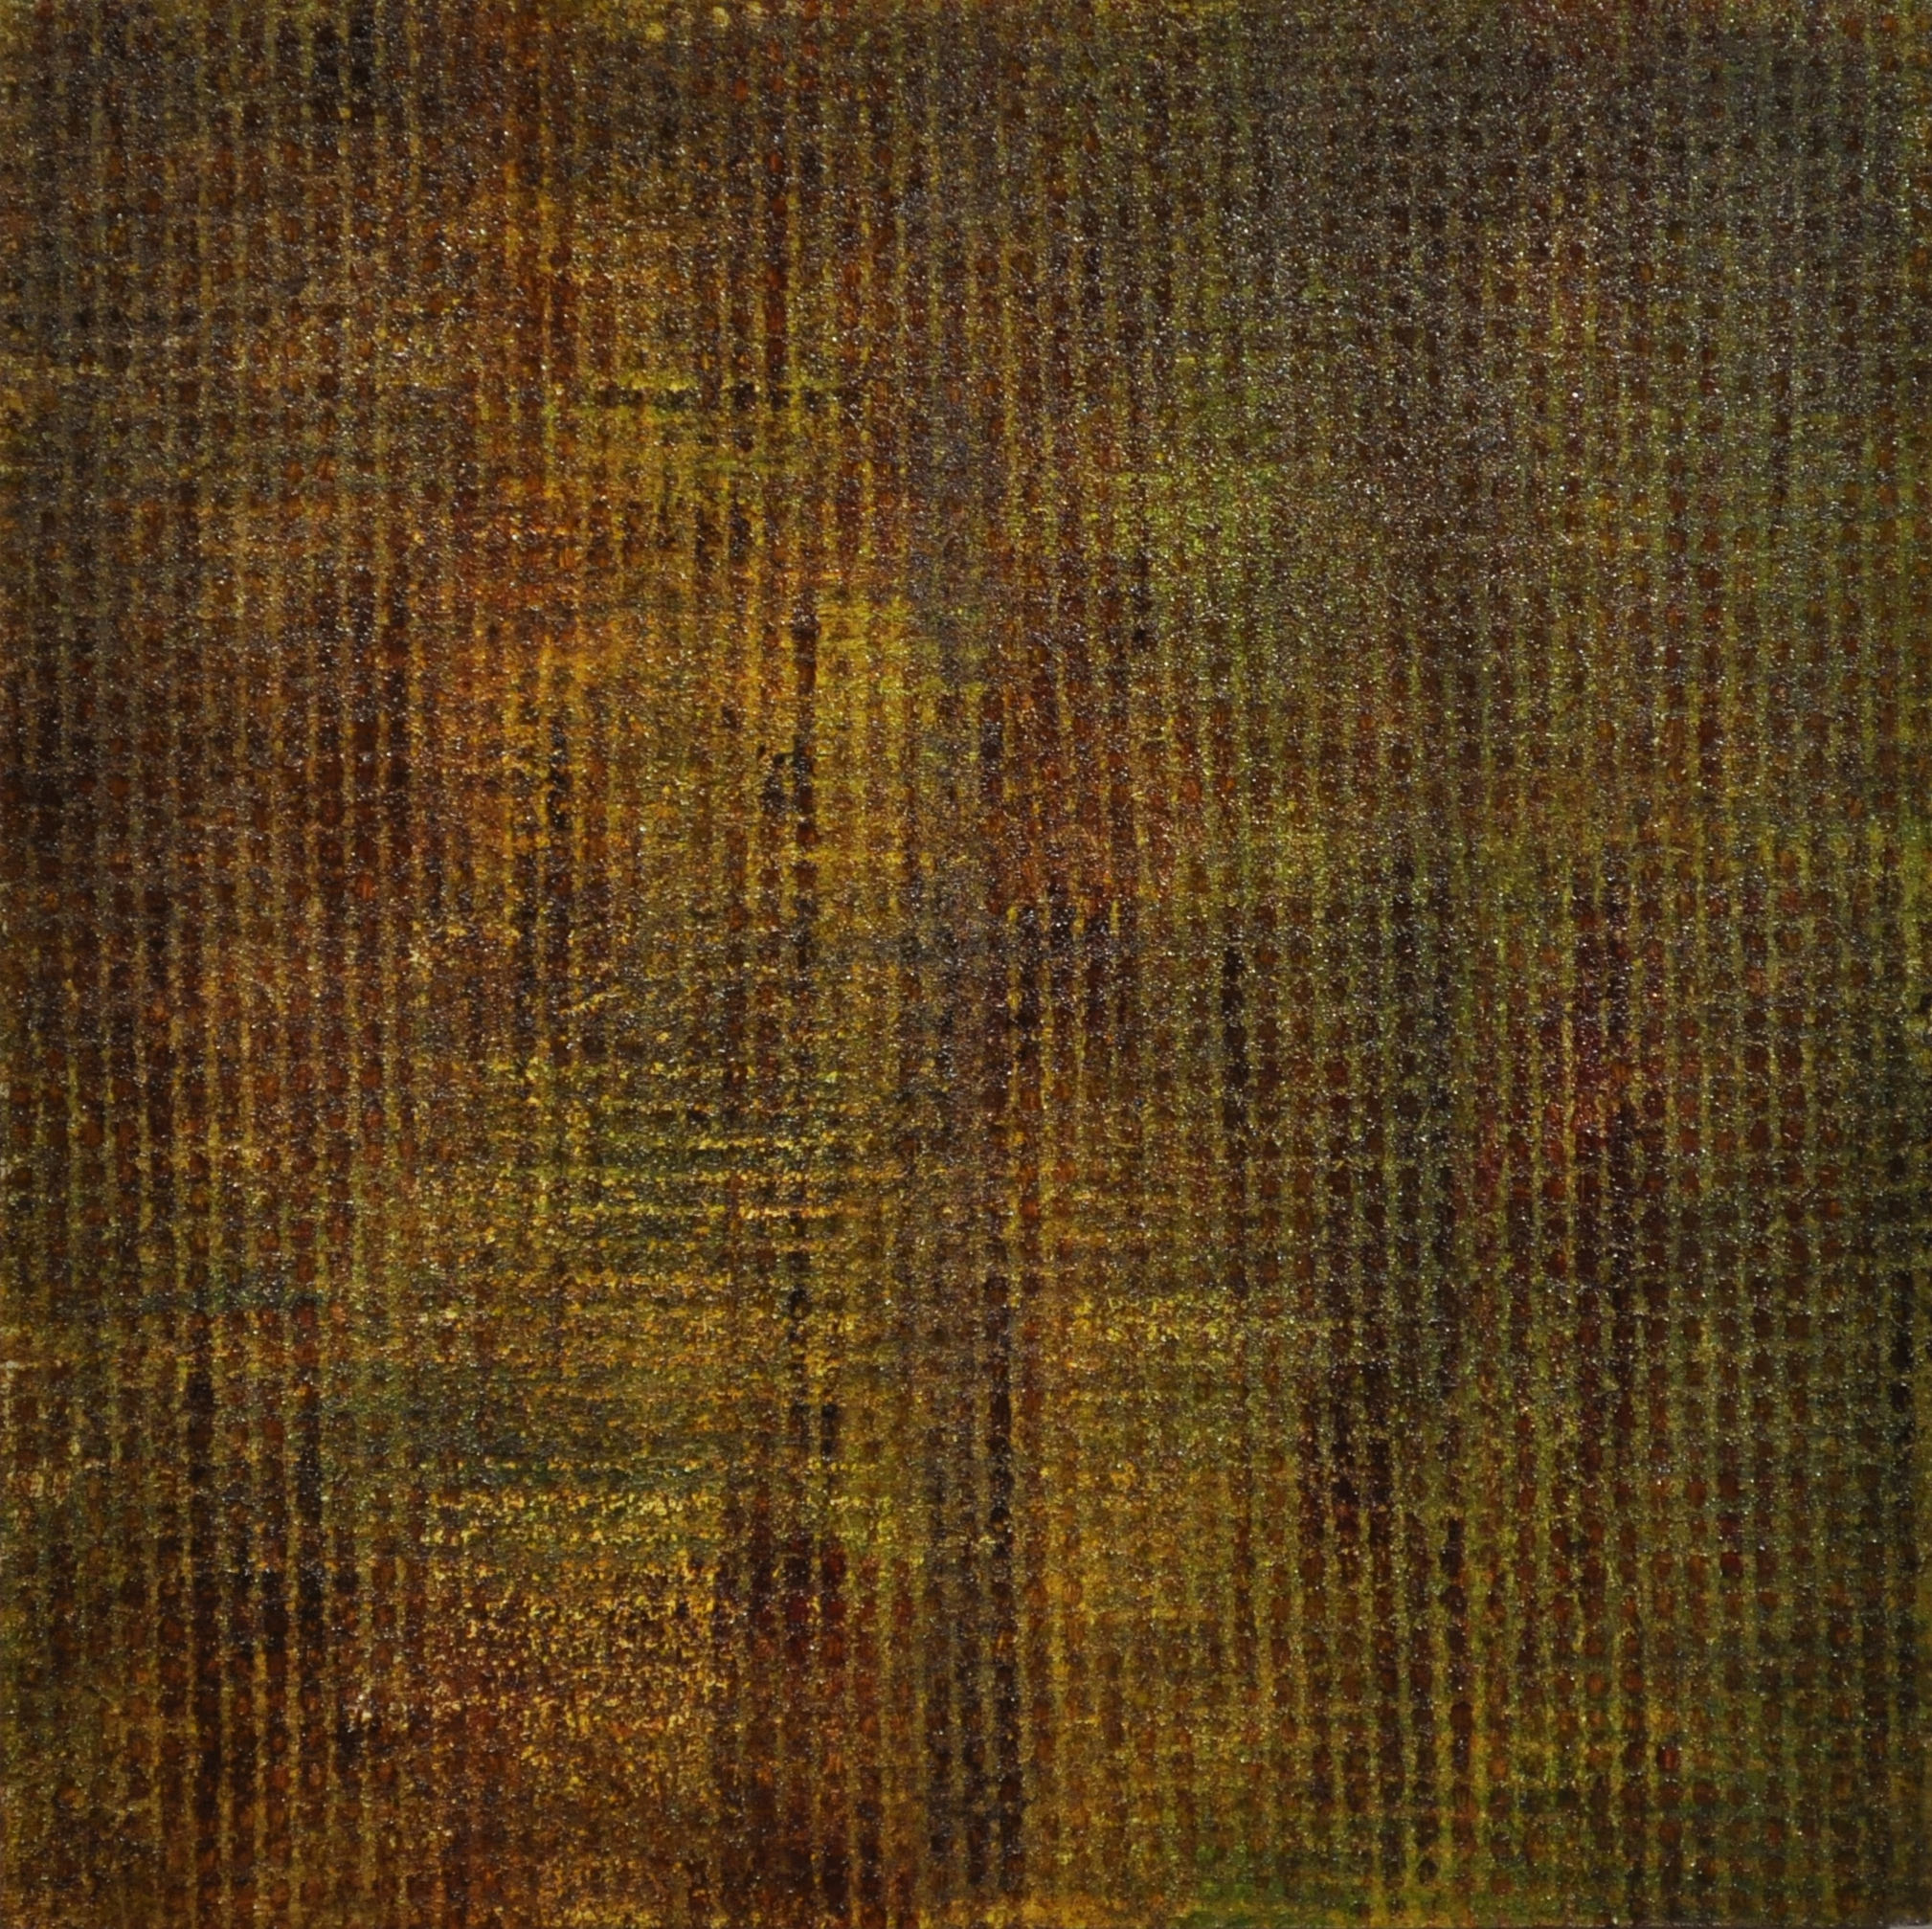  discern, 2017  oil on wood panel, 20 x 20 cm 